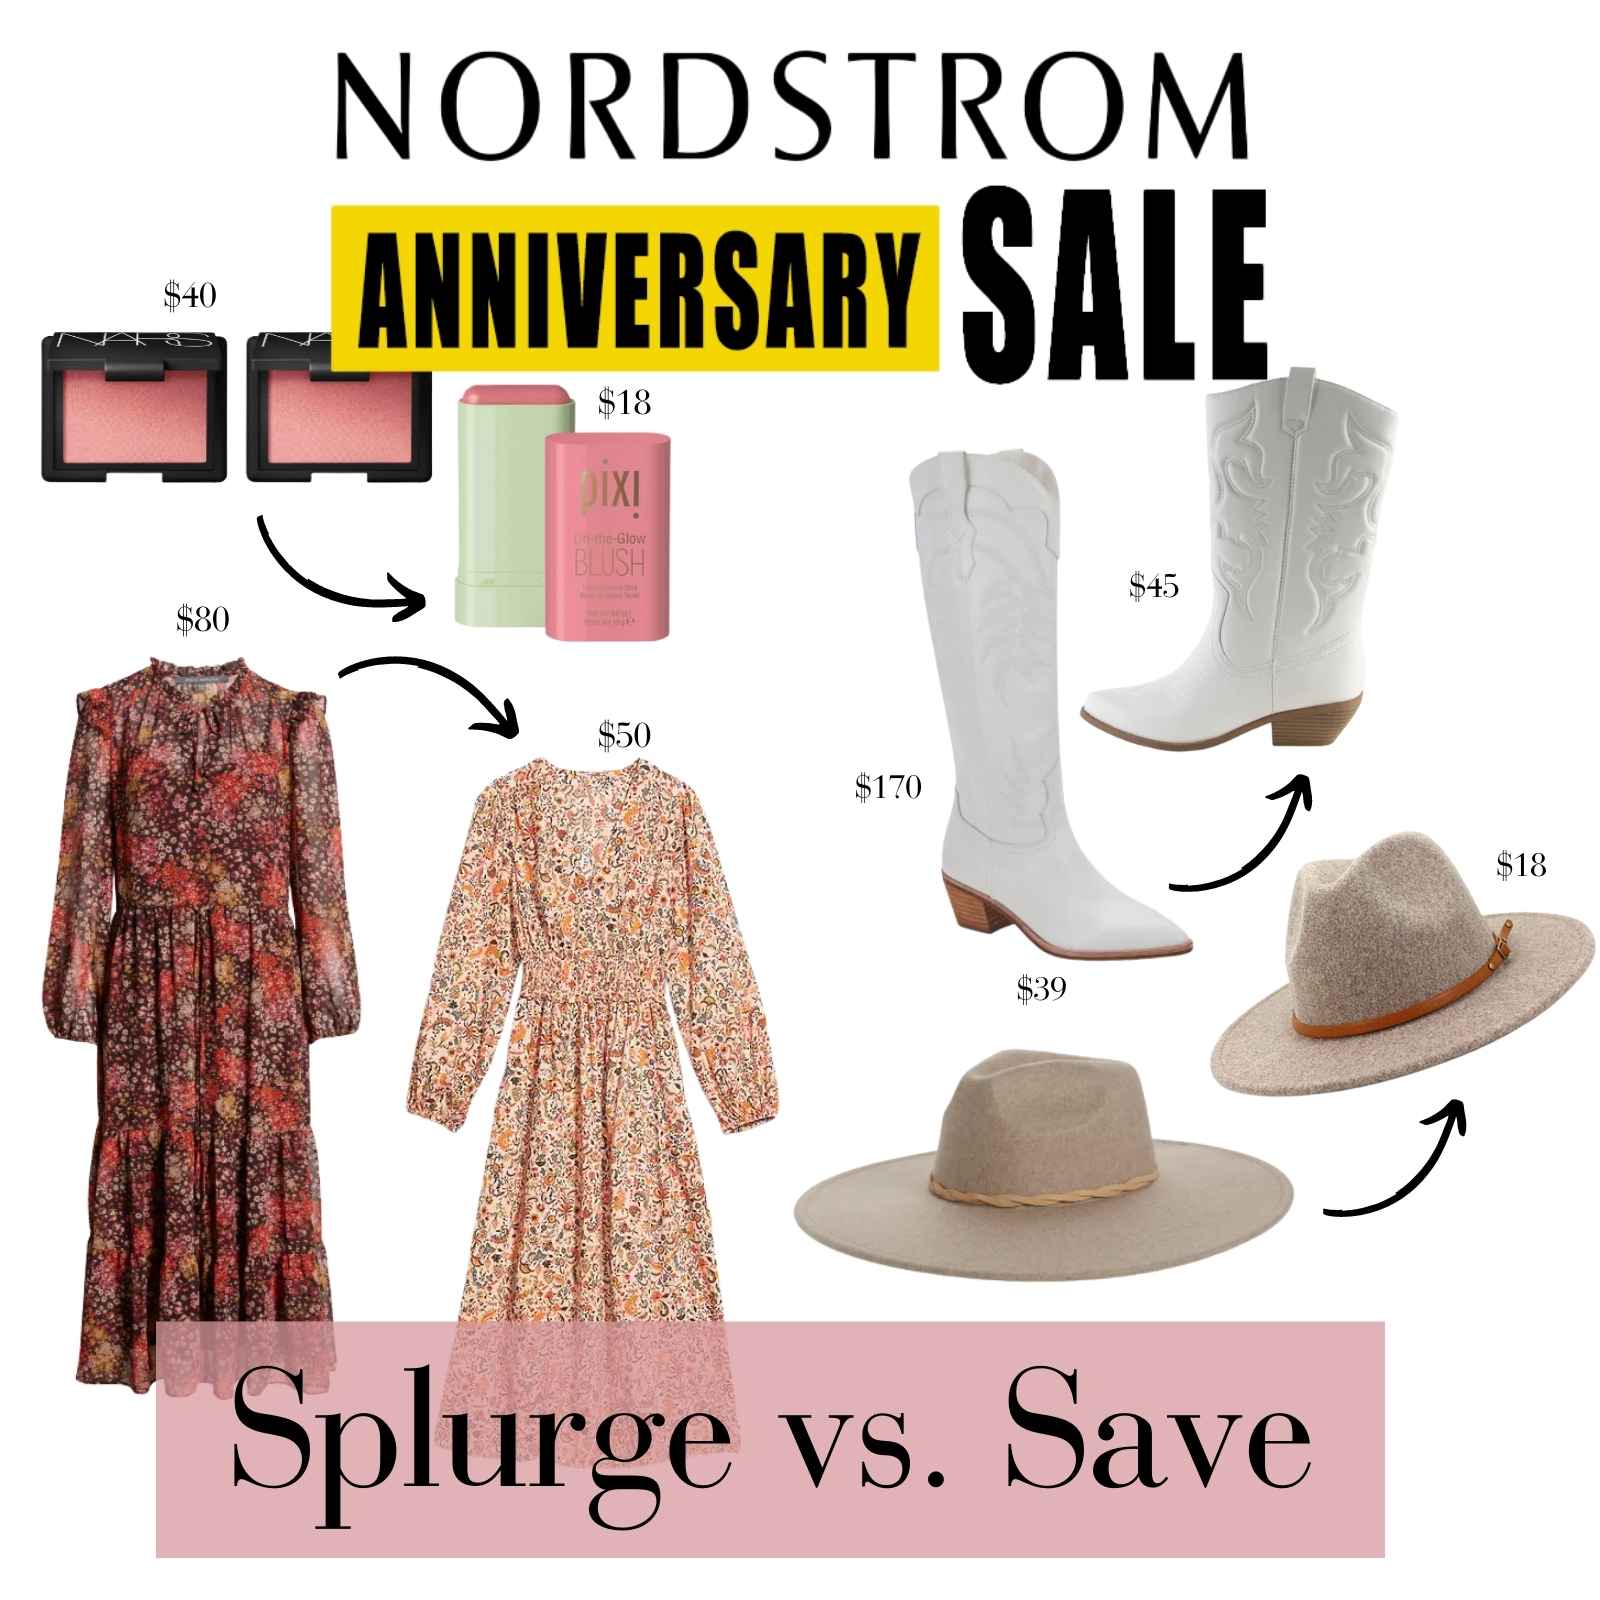 Nordstrom Anniversary Sale save vs. splurge